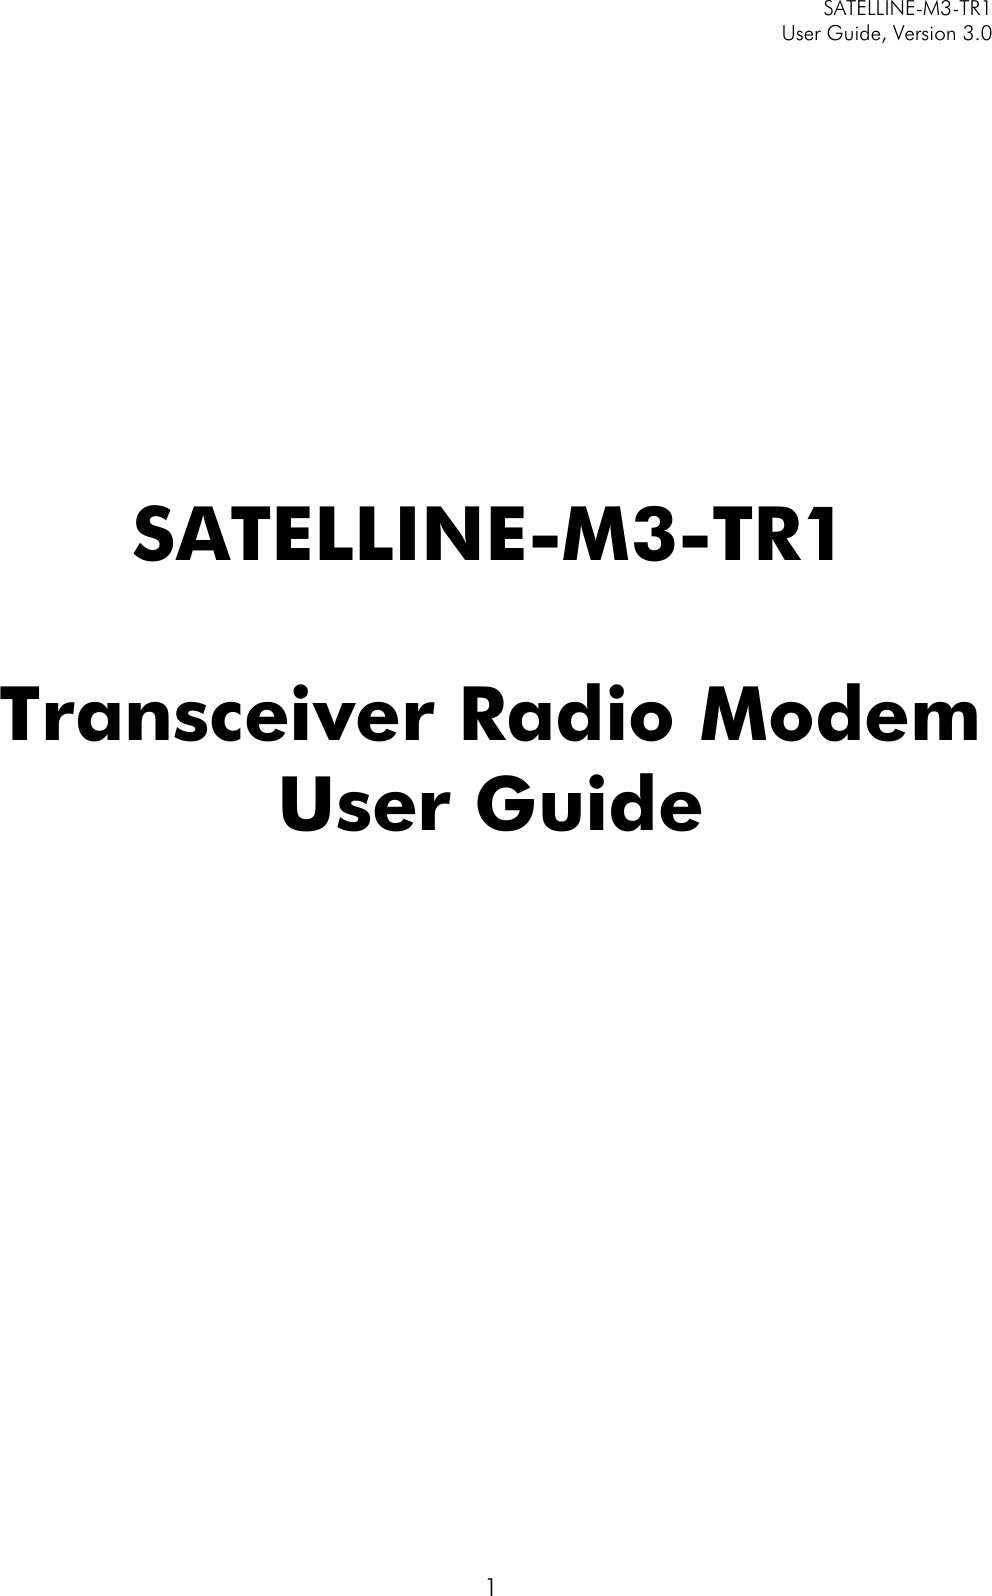     SATELLINE-M3-TR1     User Guide, Version 3.0  1                   SATELLINE-M3-TR1   Transceiver Radio Modem  User Guide       